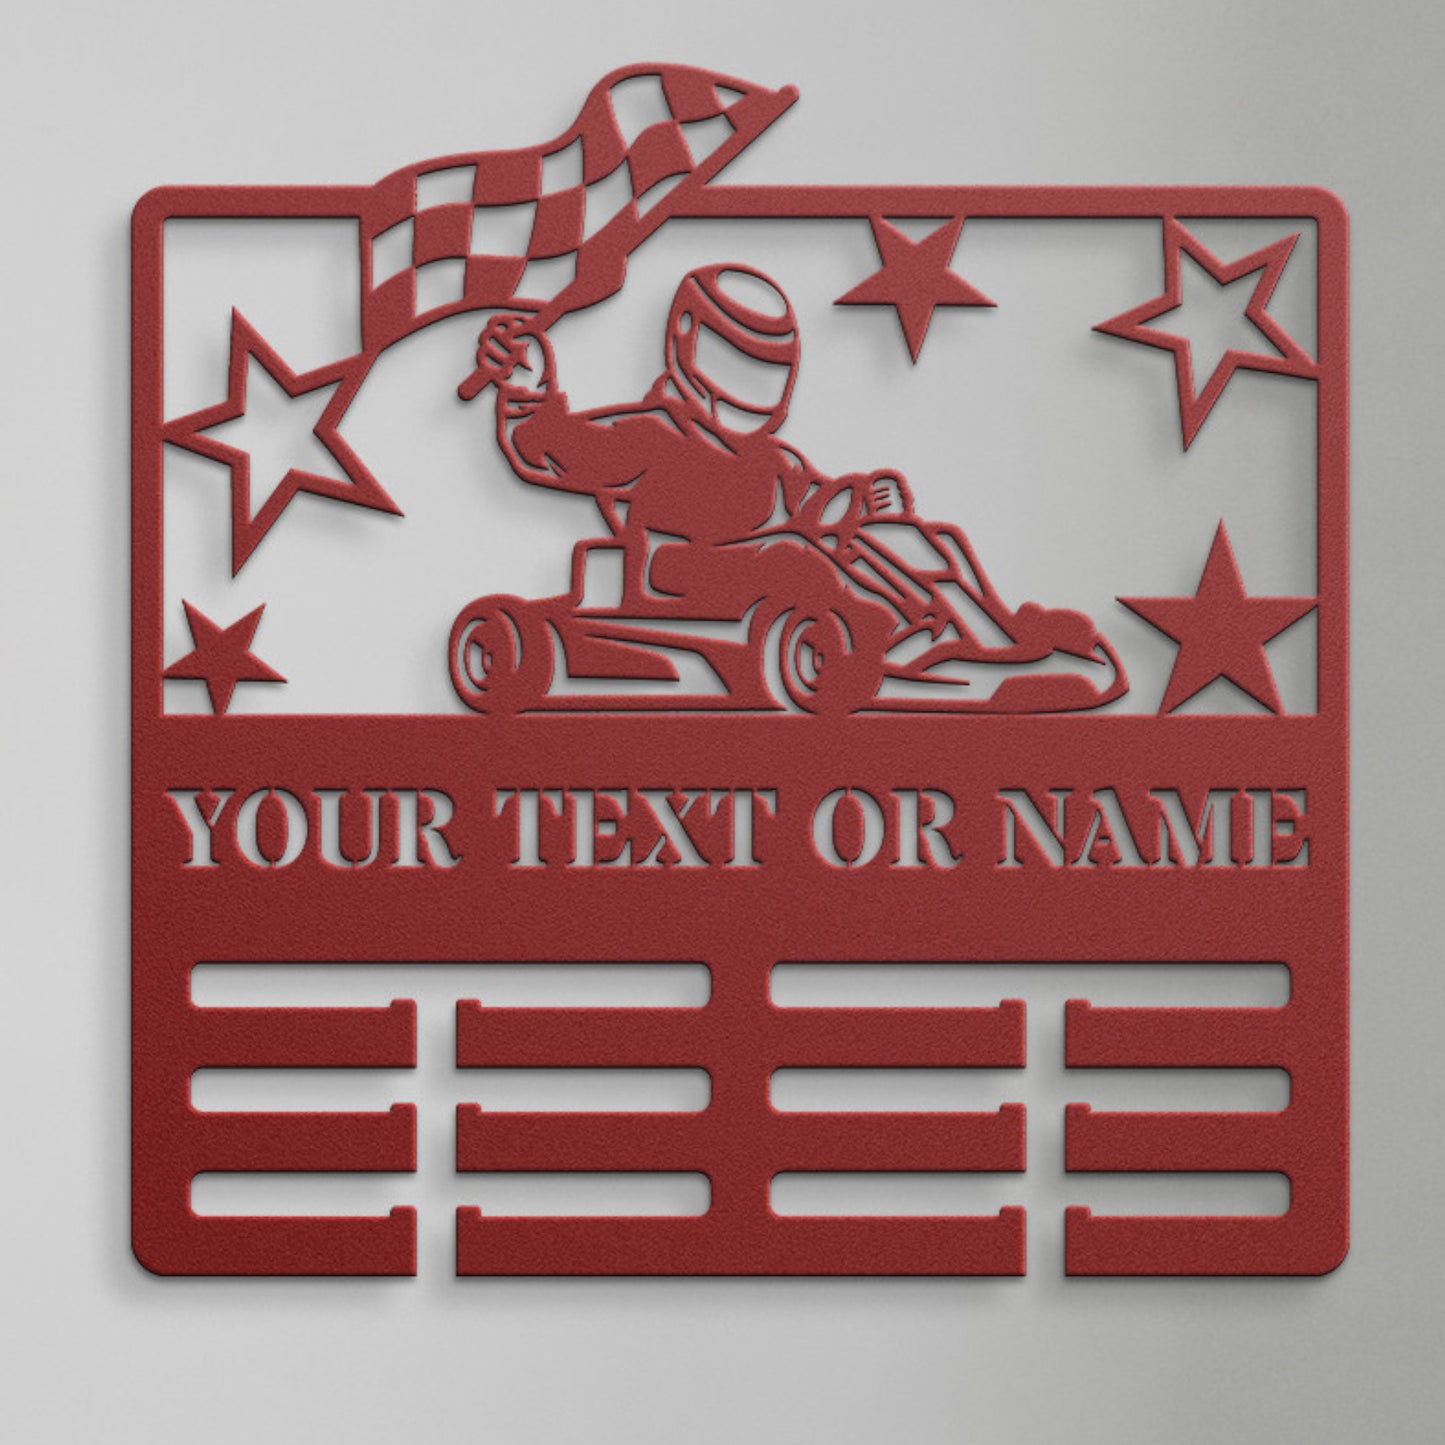 Personalized Karting Medal Holder Name Metal Sign. Custom Go Kart Medal Display Gift. Medal Display. Race Winner Gift. Sports Champion Decor